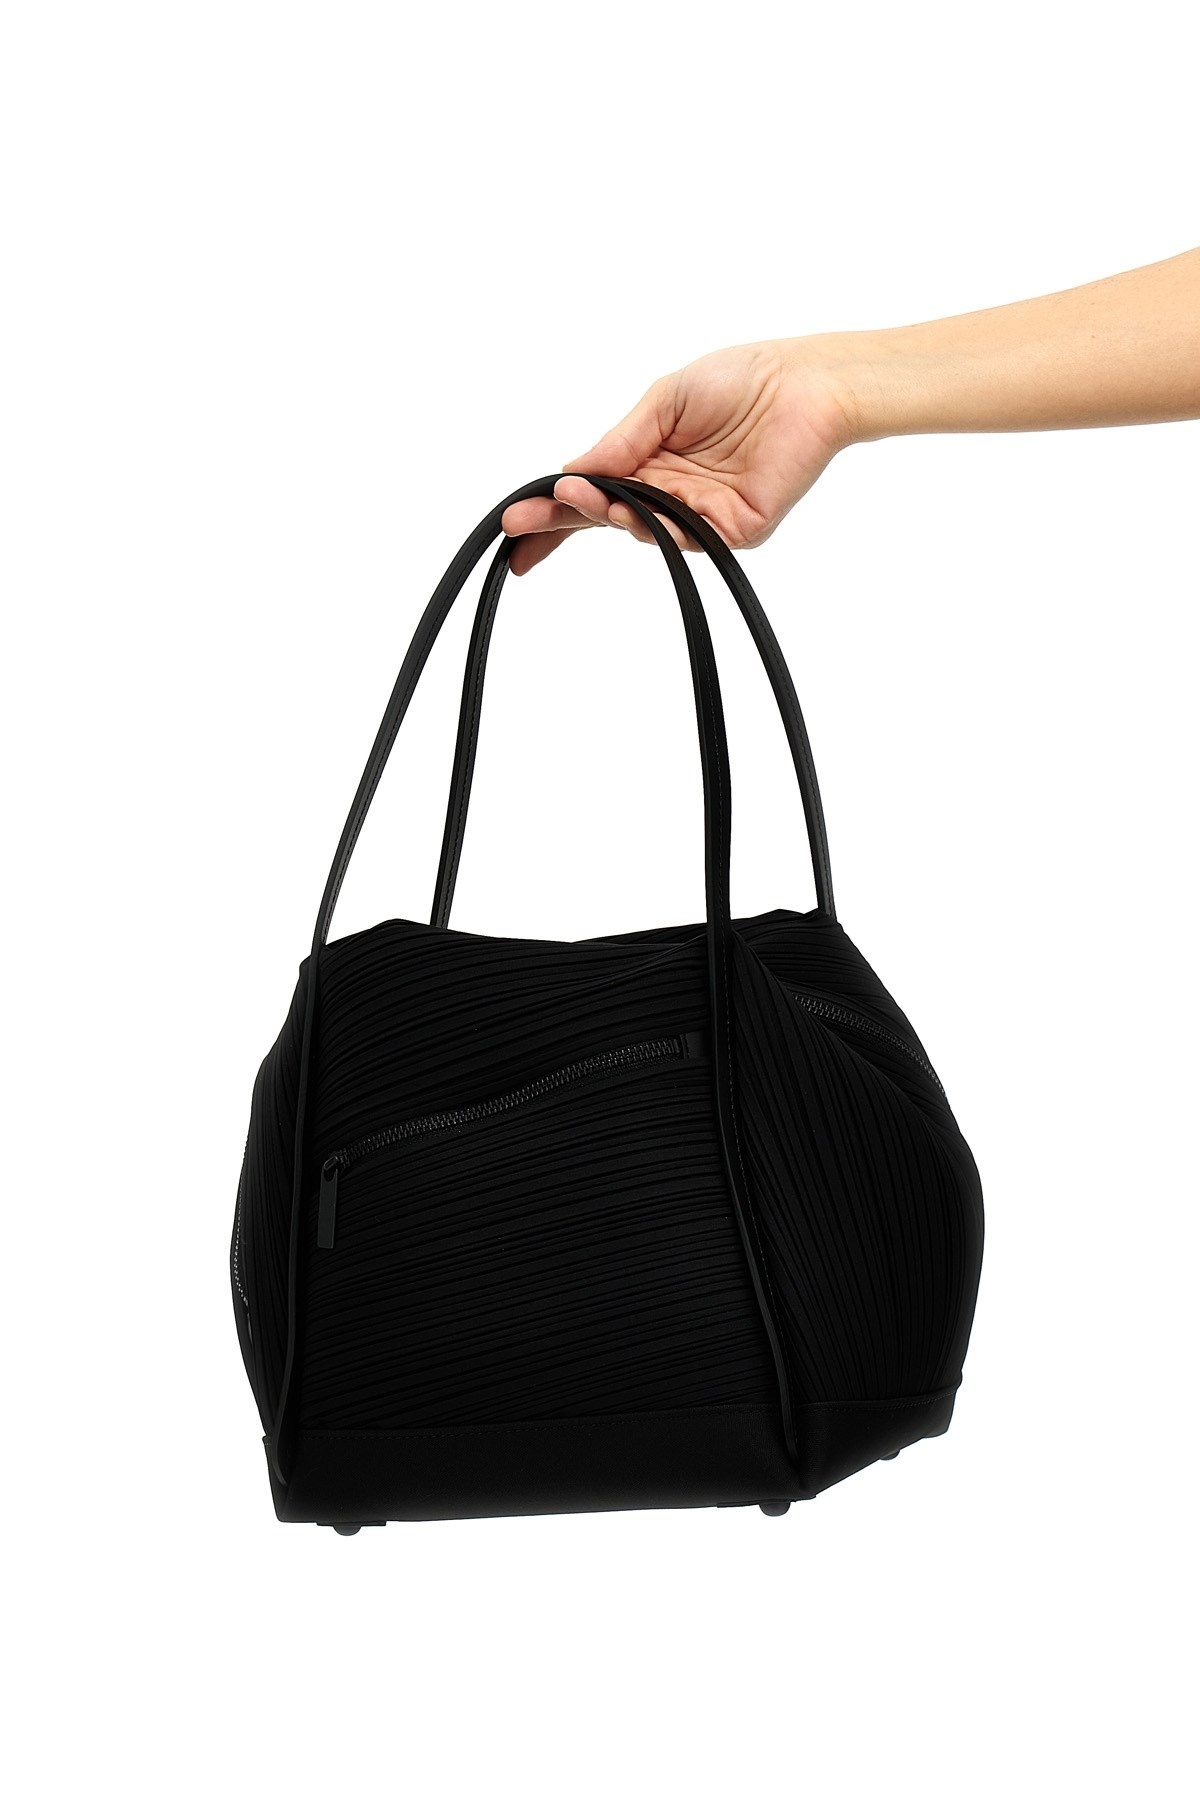 'Bias Pleats' handbag - 2